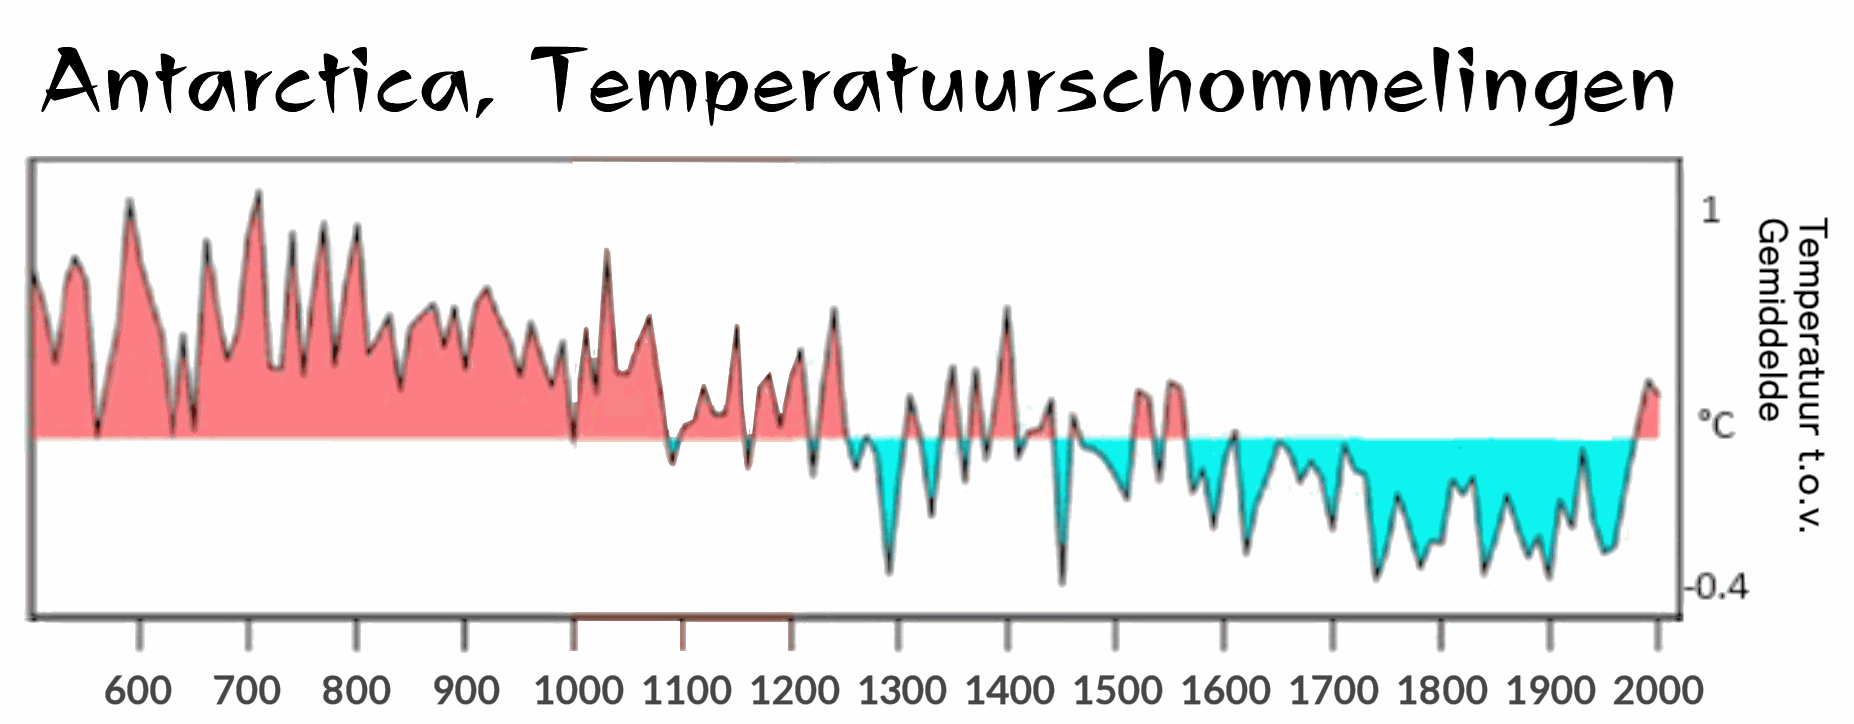 grafiek Zuidpool temperatuurverandering 500-2000